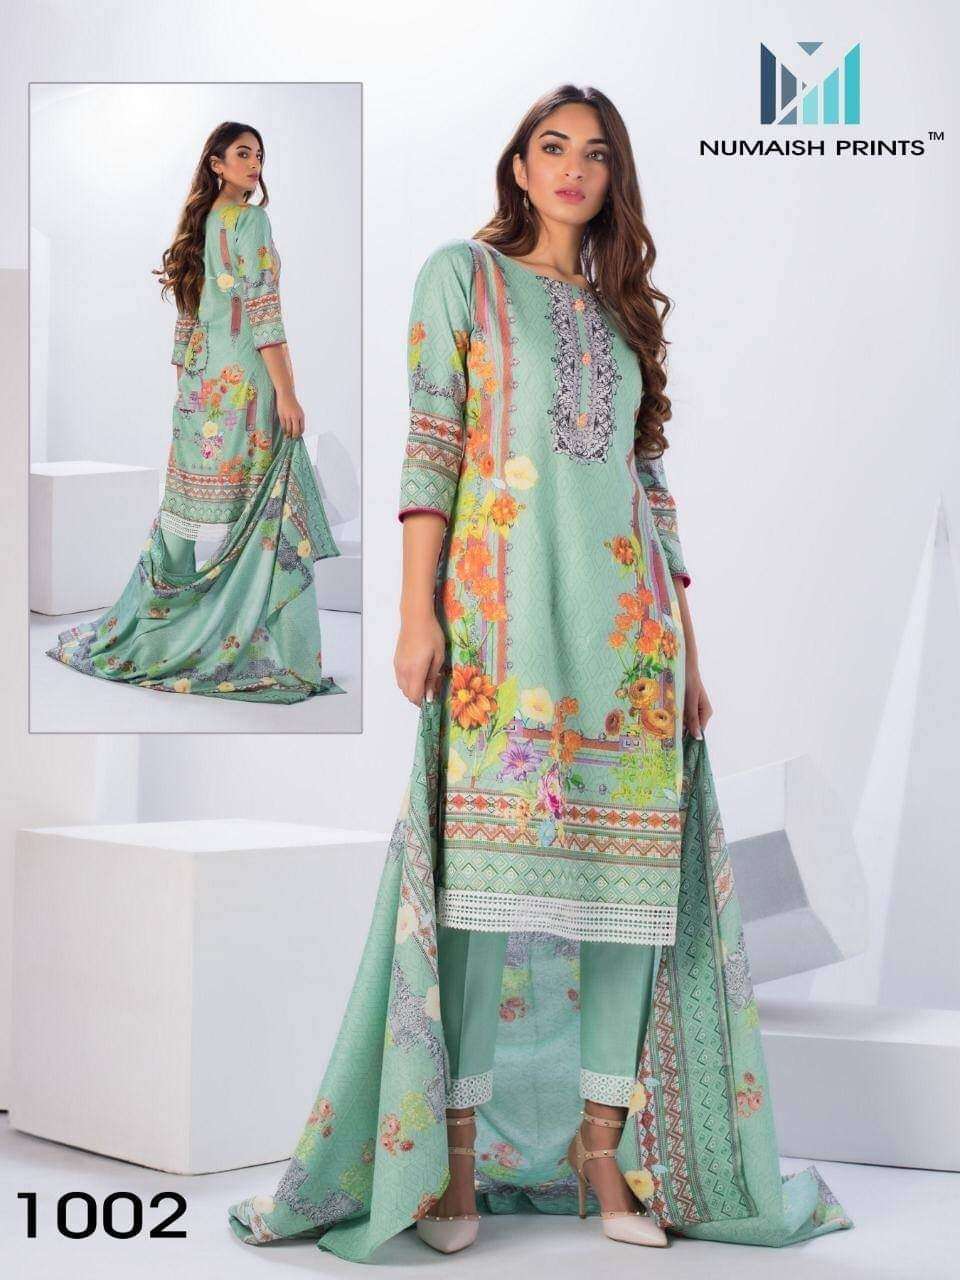 Numaish Prints Mishaal Premium Lawn Cotton Printed Dress Materials On Wholesale